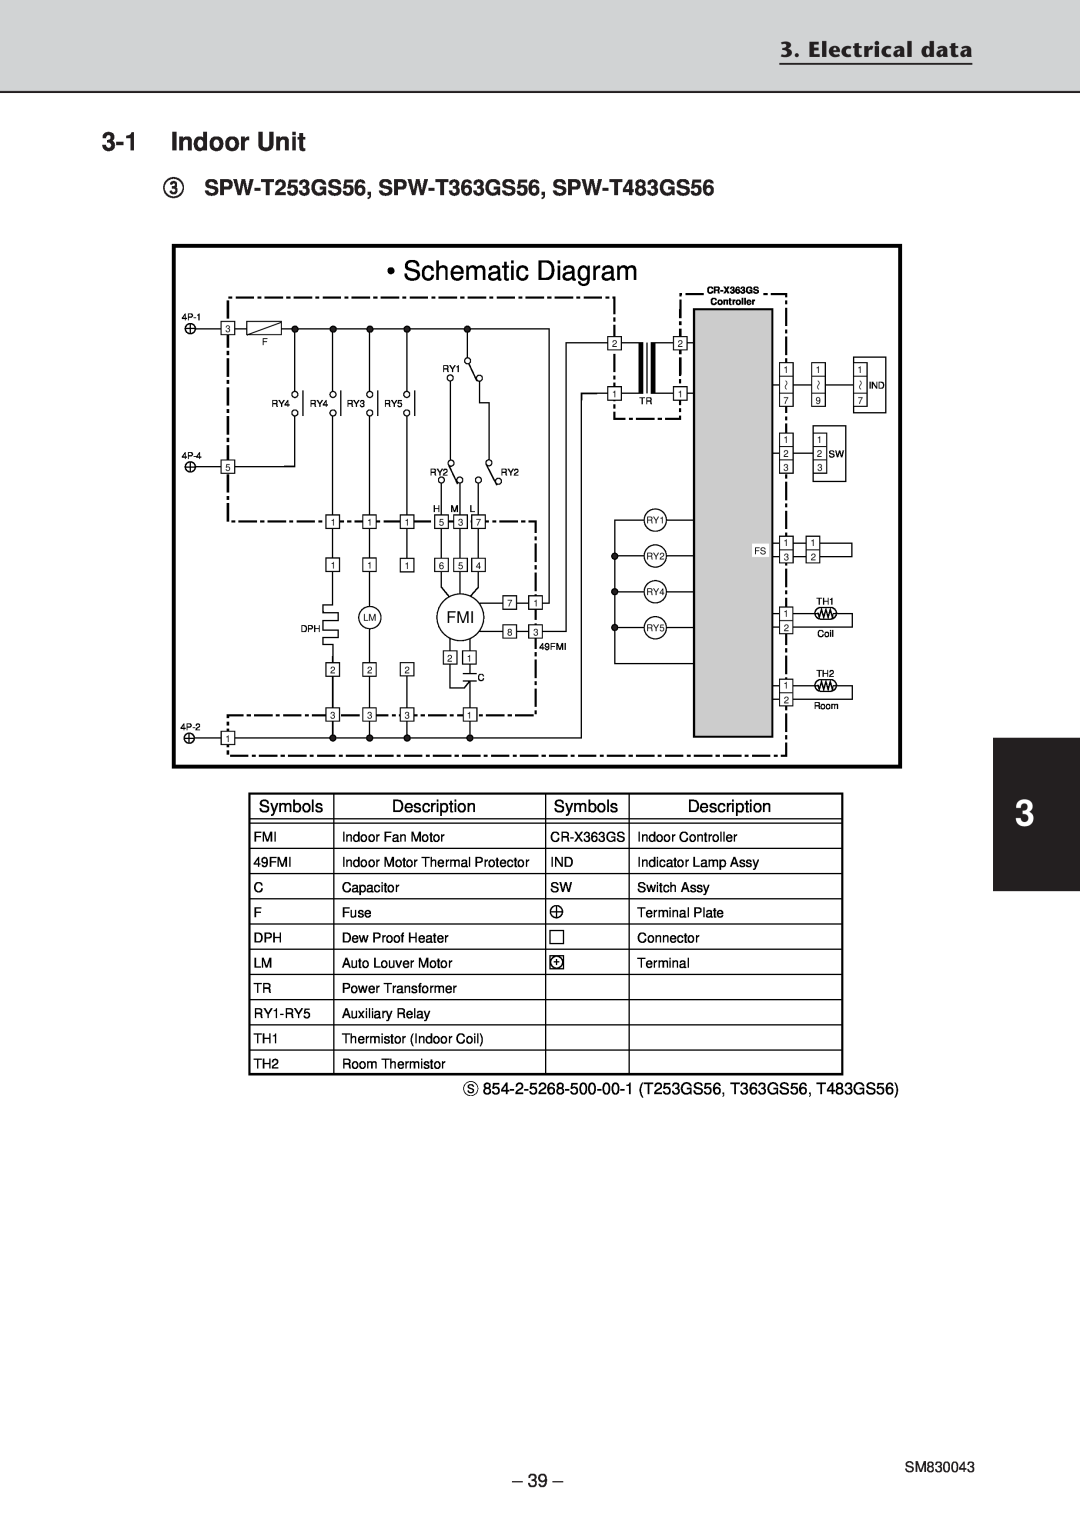 Sanyo SPW-C363G8, SPW-T363GS56, SPW-T483G56 Schematic Diagram, 3-1Indoor Unit, Electrical data, Symbols, Description 